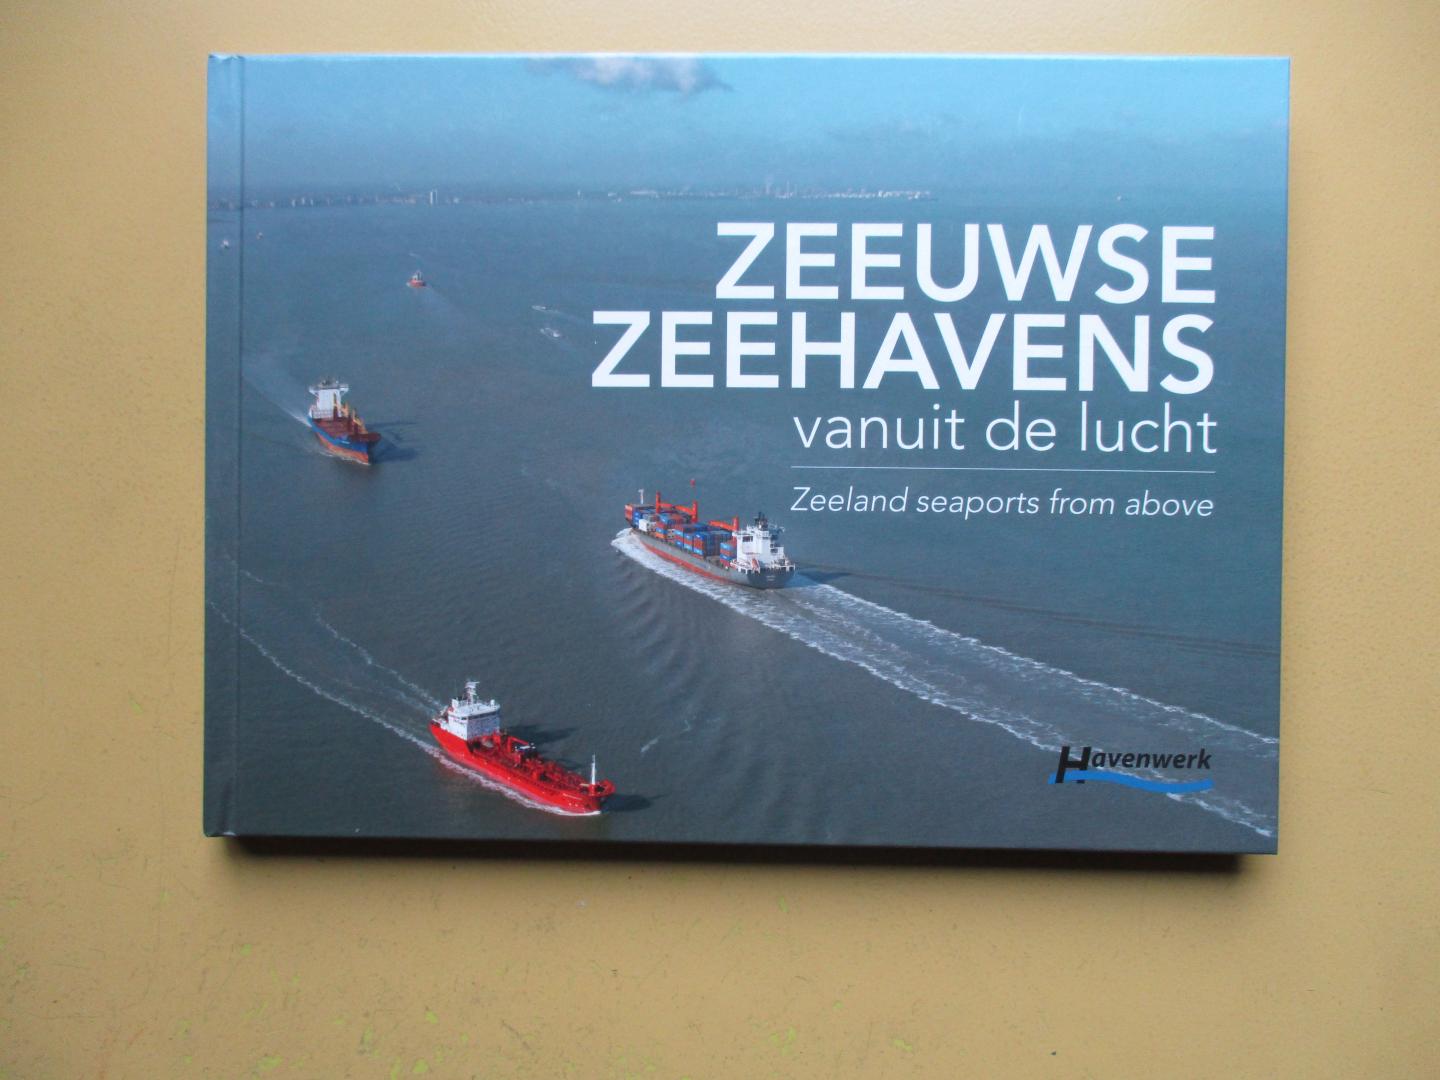 Maldegem, Erna van / Woercom, Annemieke van / Fotografie Izak van Maldegem - Zeeuwse zeehavens vanuit de lucht / Zeeland seaports from above